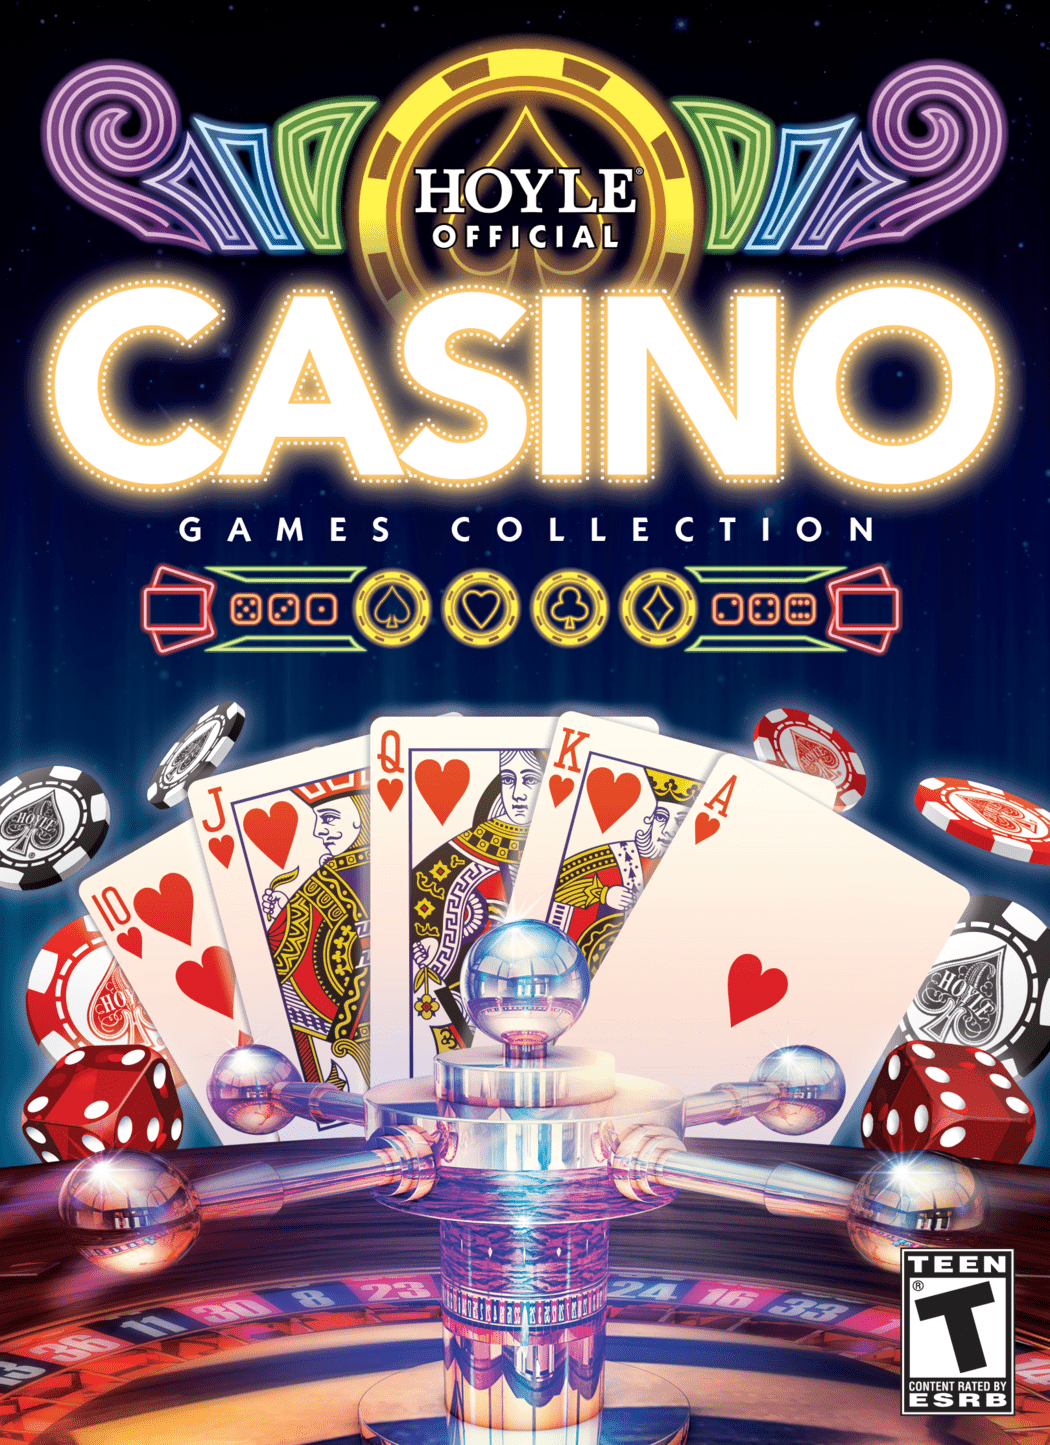  Hoyle Casino Games 2012 [Mac Download] : Video Games